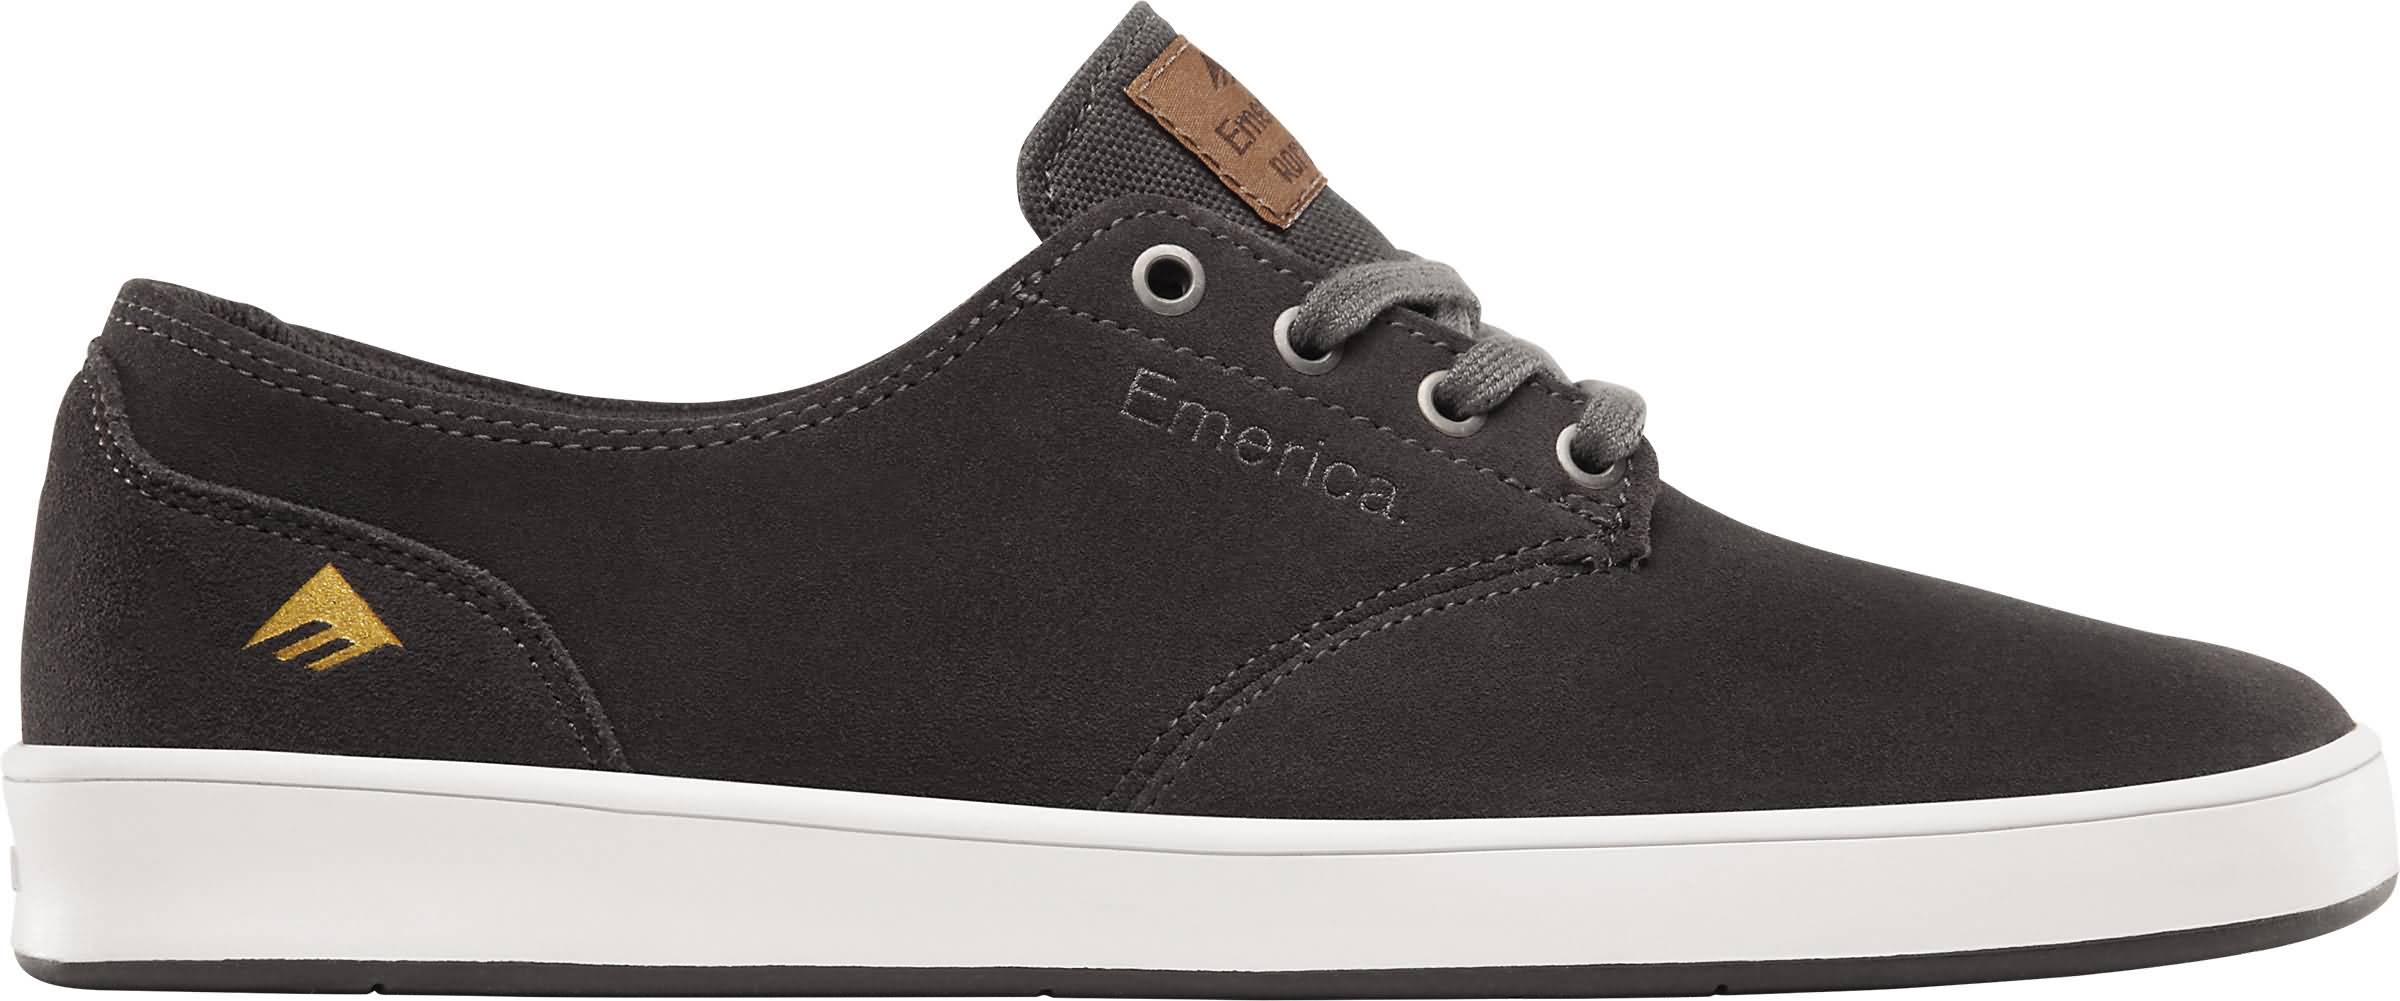 Emerica Fall 2017 Romero & Centry Skateboarding Shoe Collection